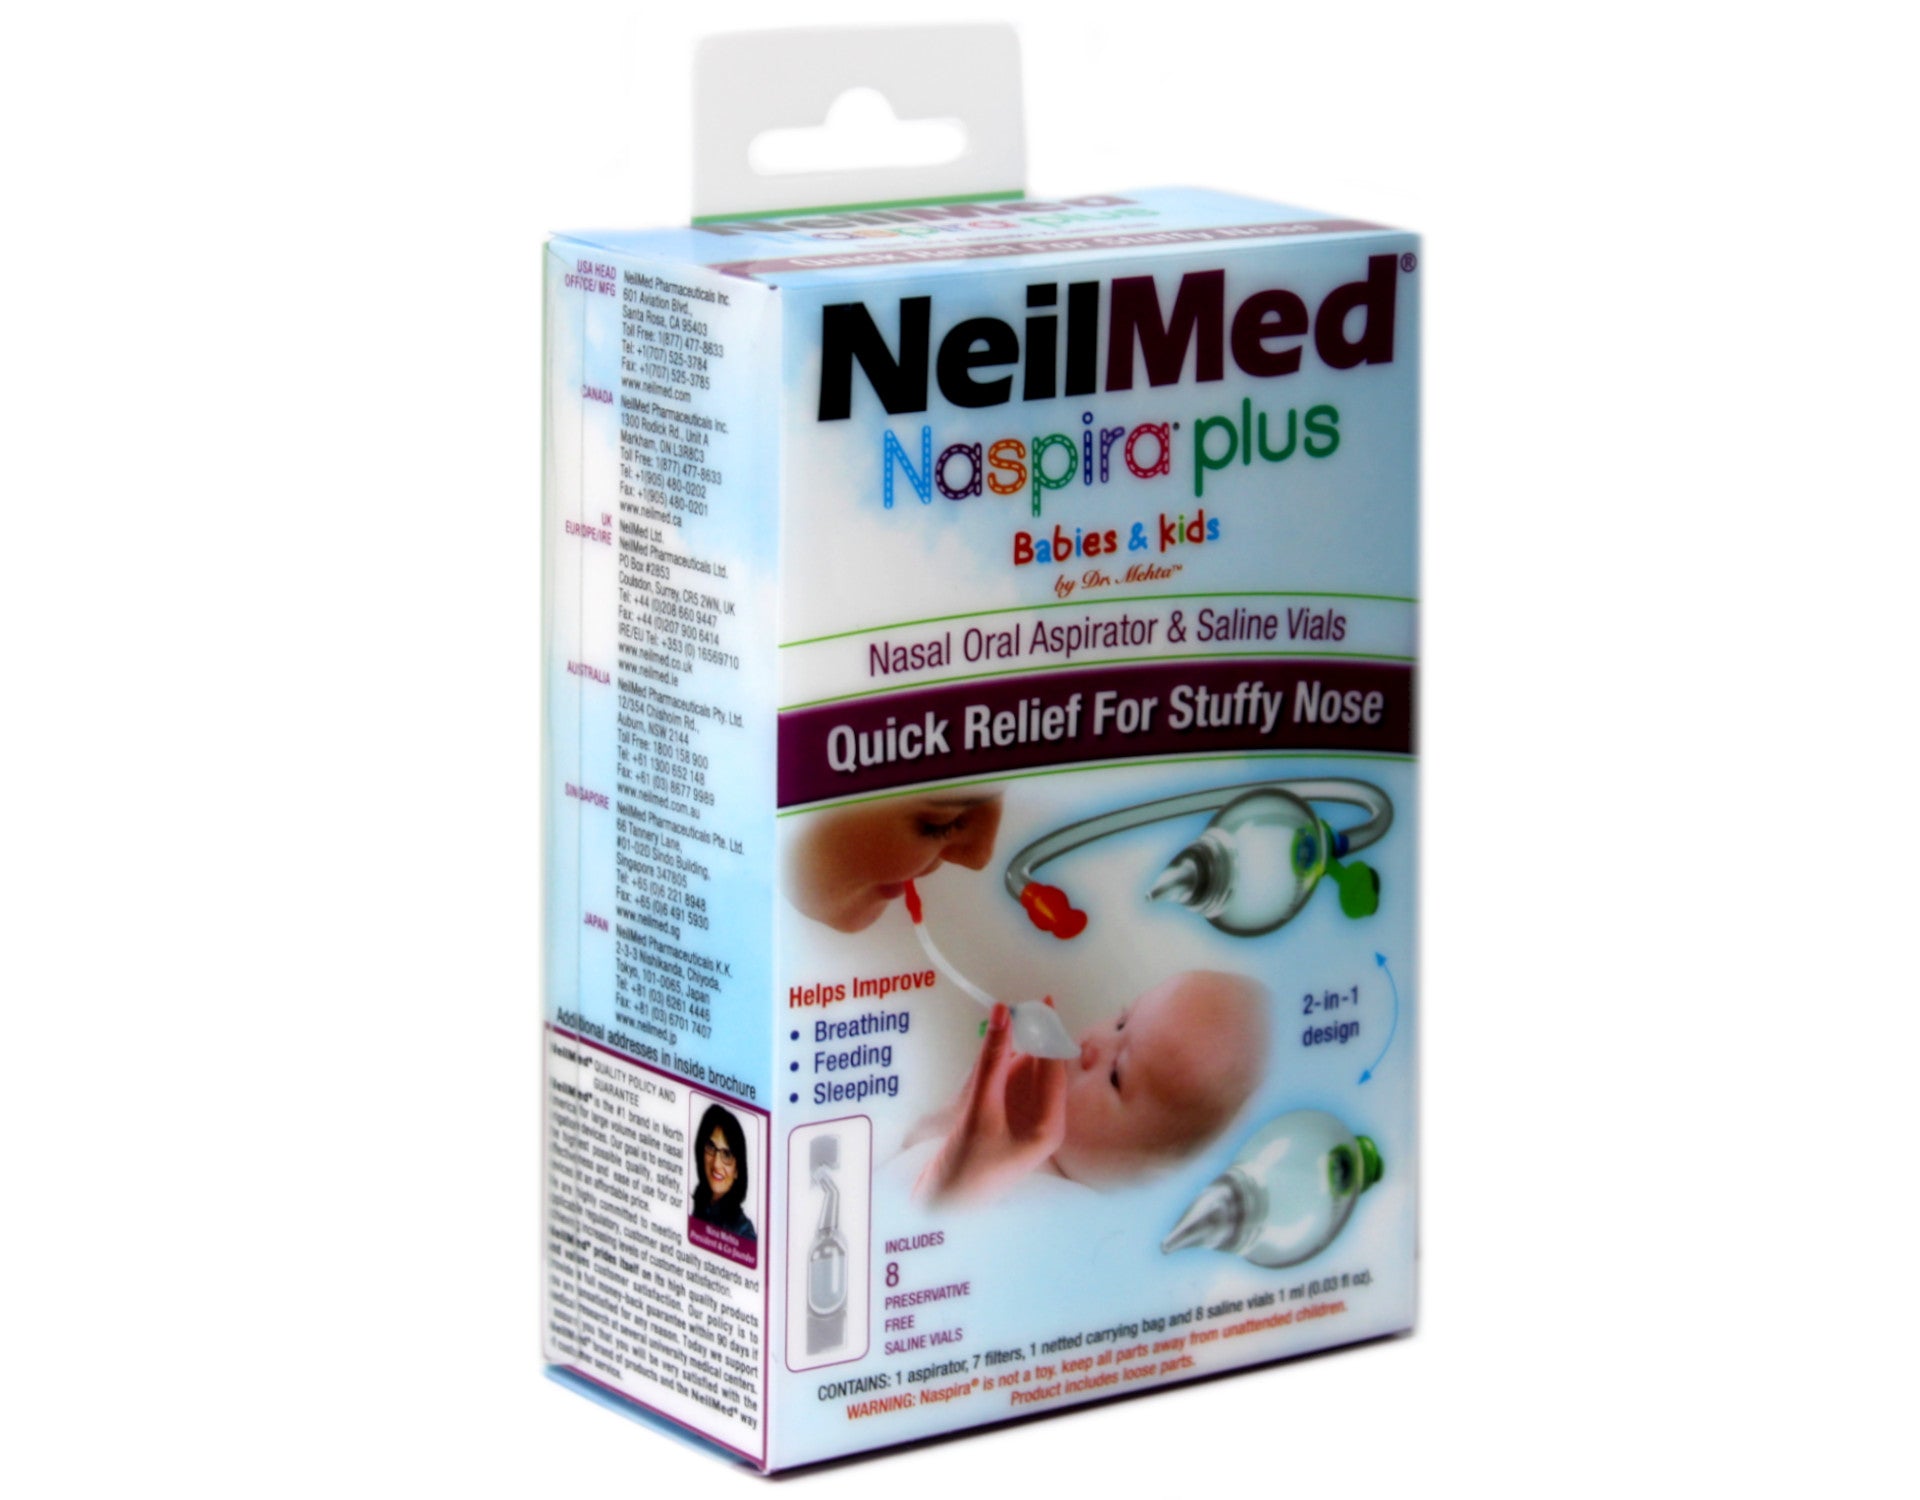 NeilMed Naspira Plus Babies & Kids Nasal-Oral Aspirator with Saline Vi